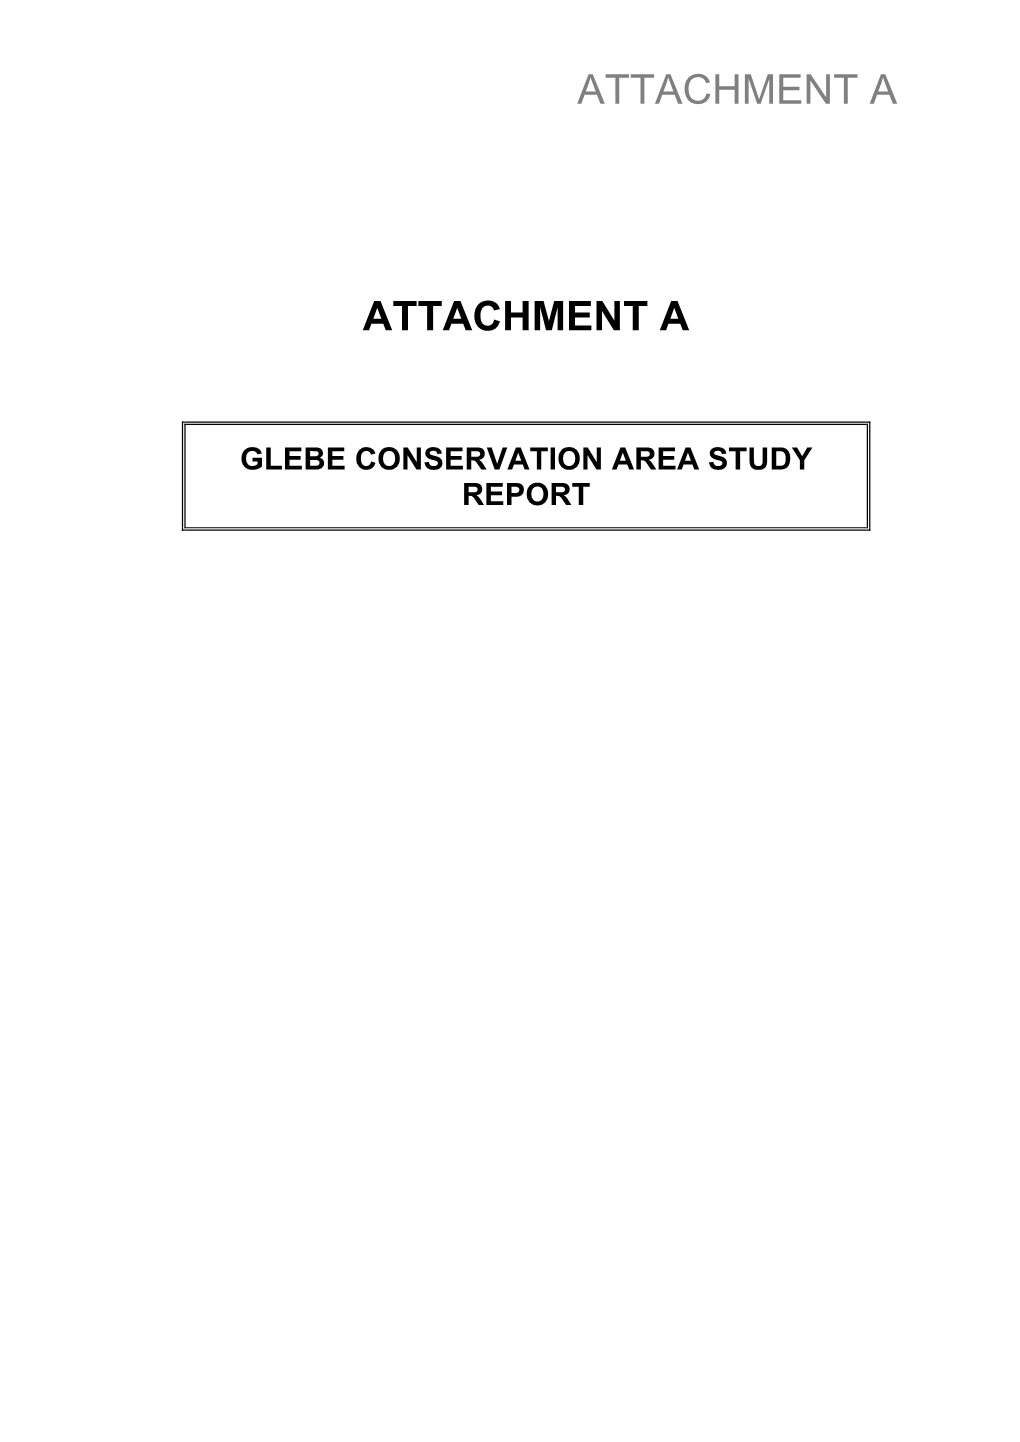 Glebe Conservation Area Study Report